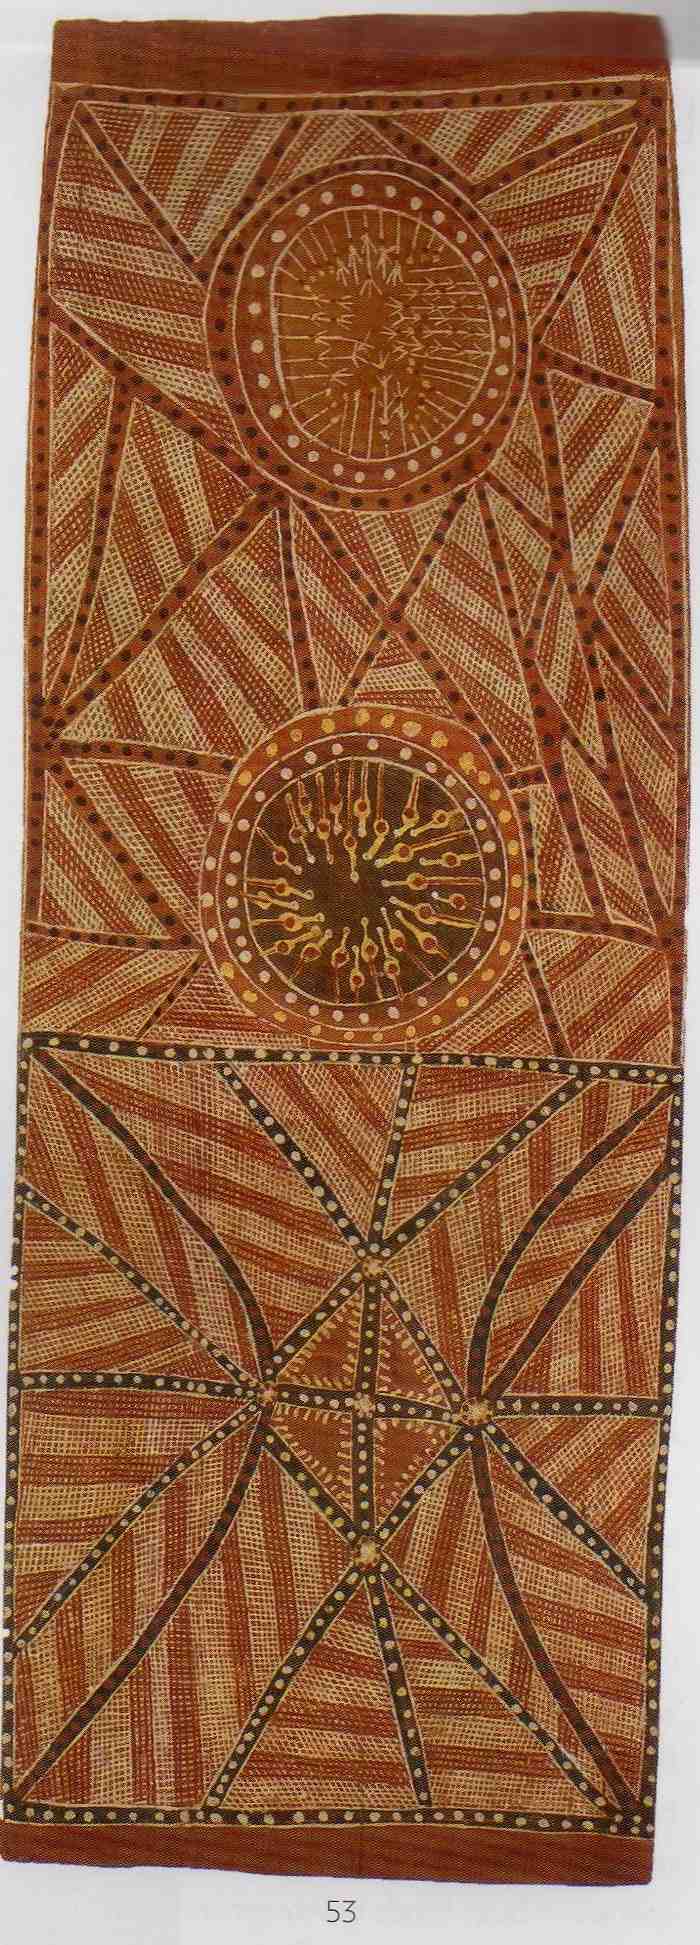 aboriginal artists